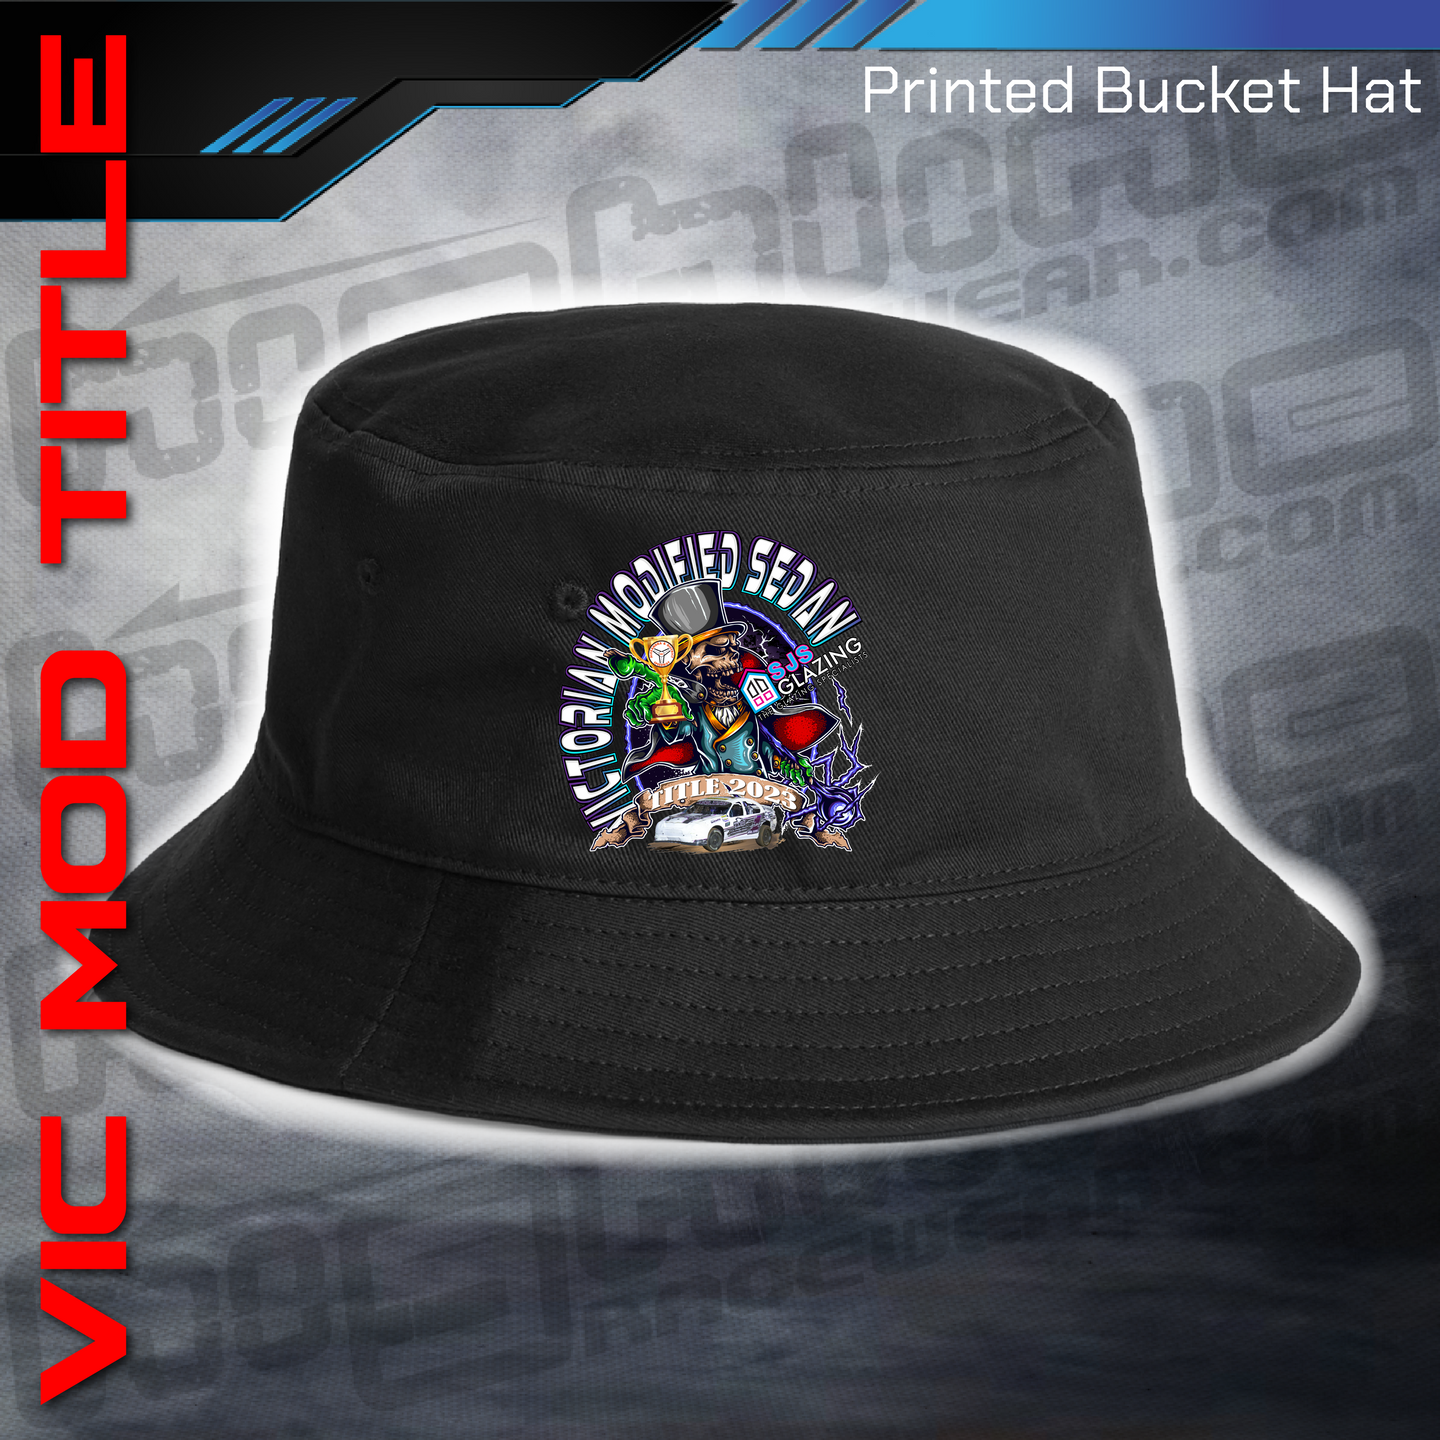 Printed Bucket Hat - Victorian Modified Sedan Title 2023